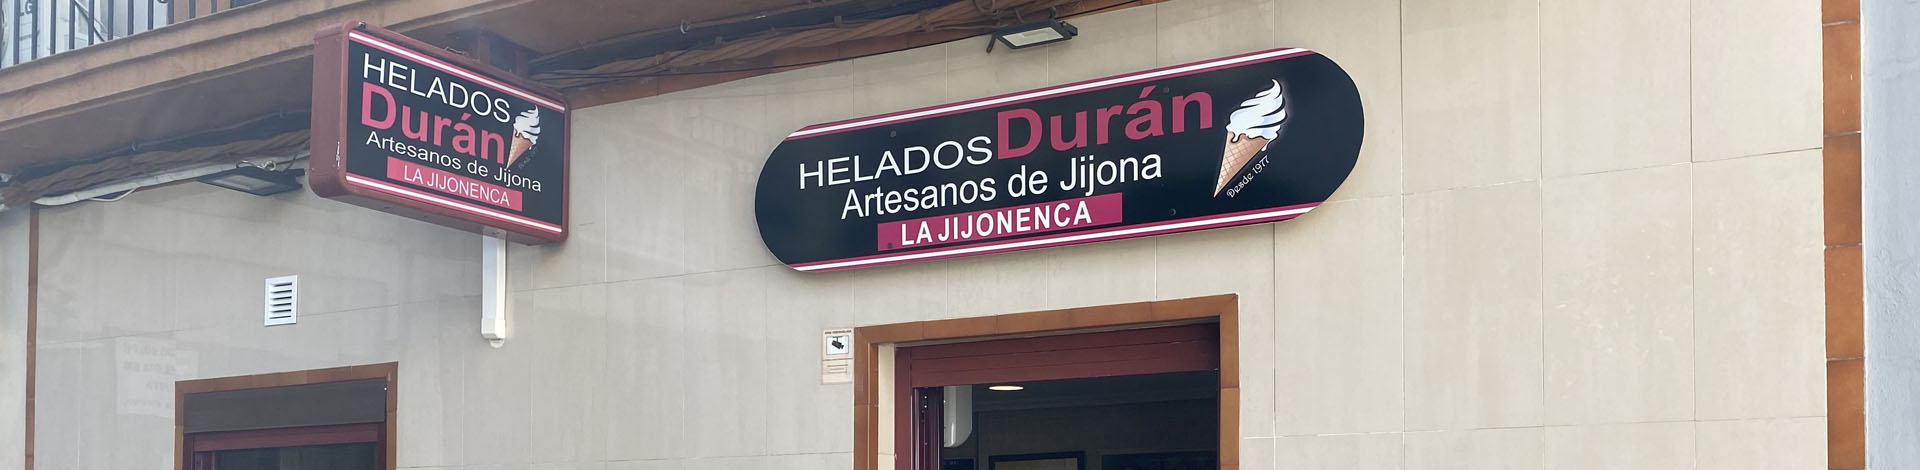 Helados Durán La Jijonenca de Andújar